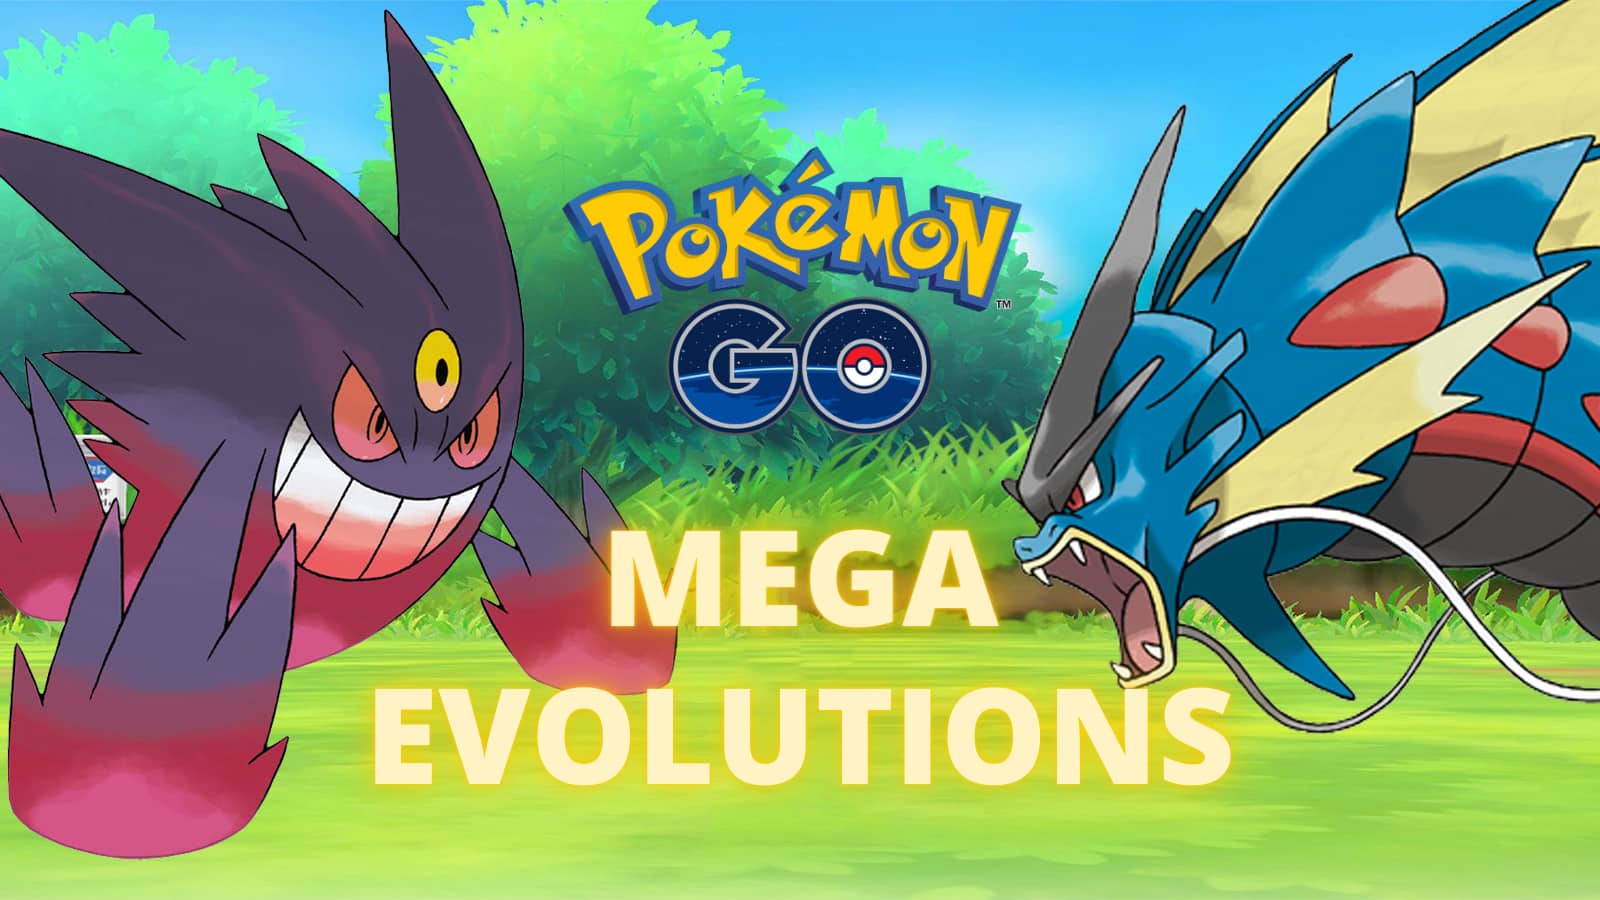 https://editors.dexerto.com/wp-content/uploads/2021/10/13/Pokemon-Go-Best-Mega-Evolutions.jpg